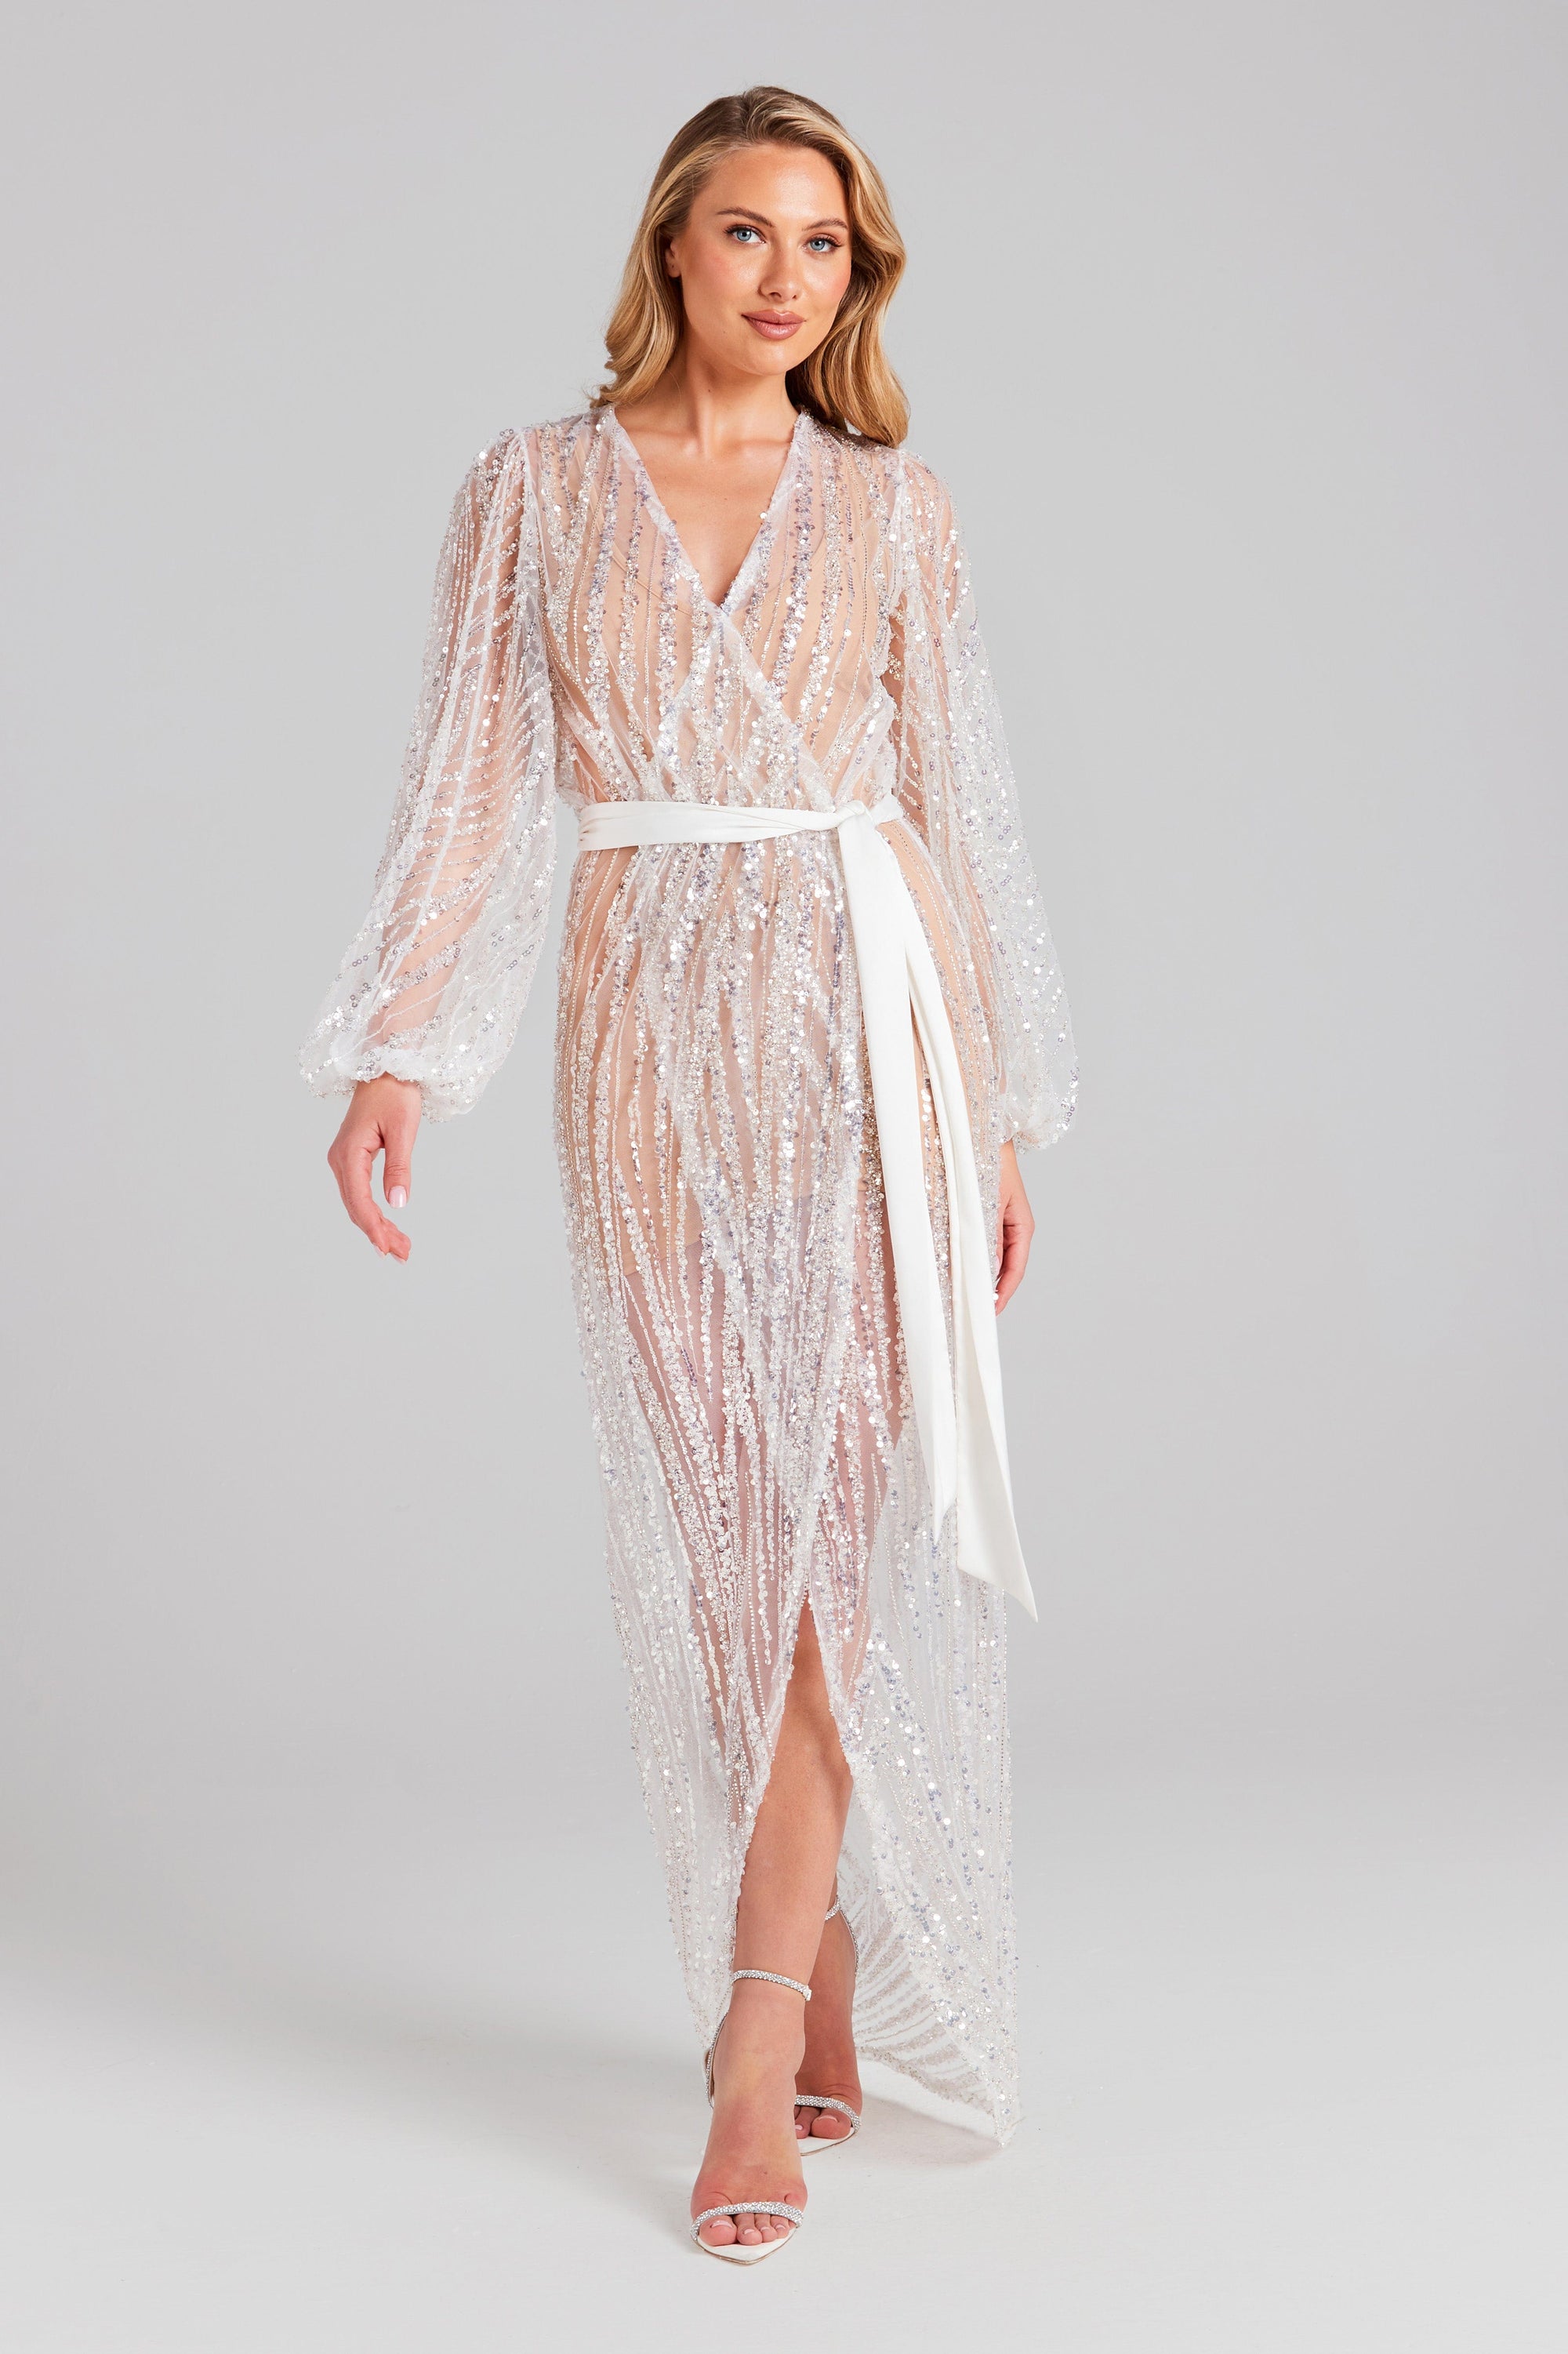 Glitter maxi dress Nadine Merabi White size S International in